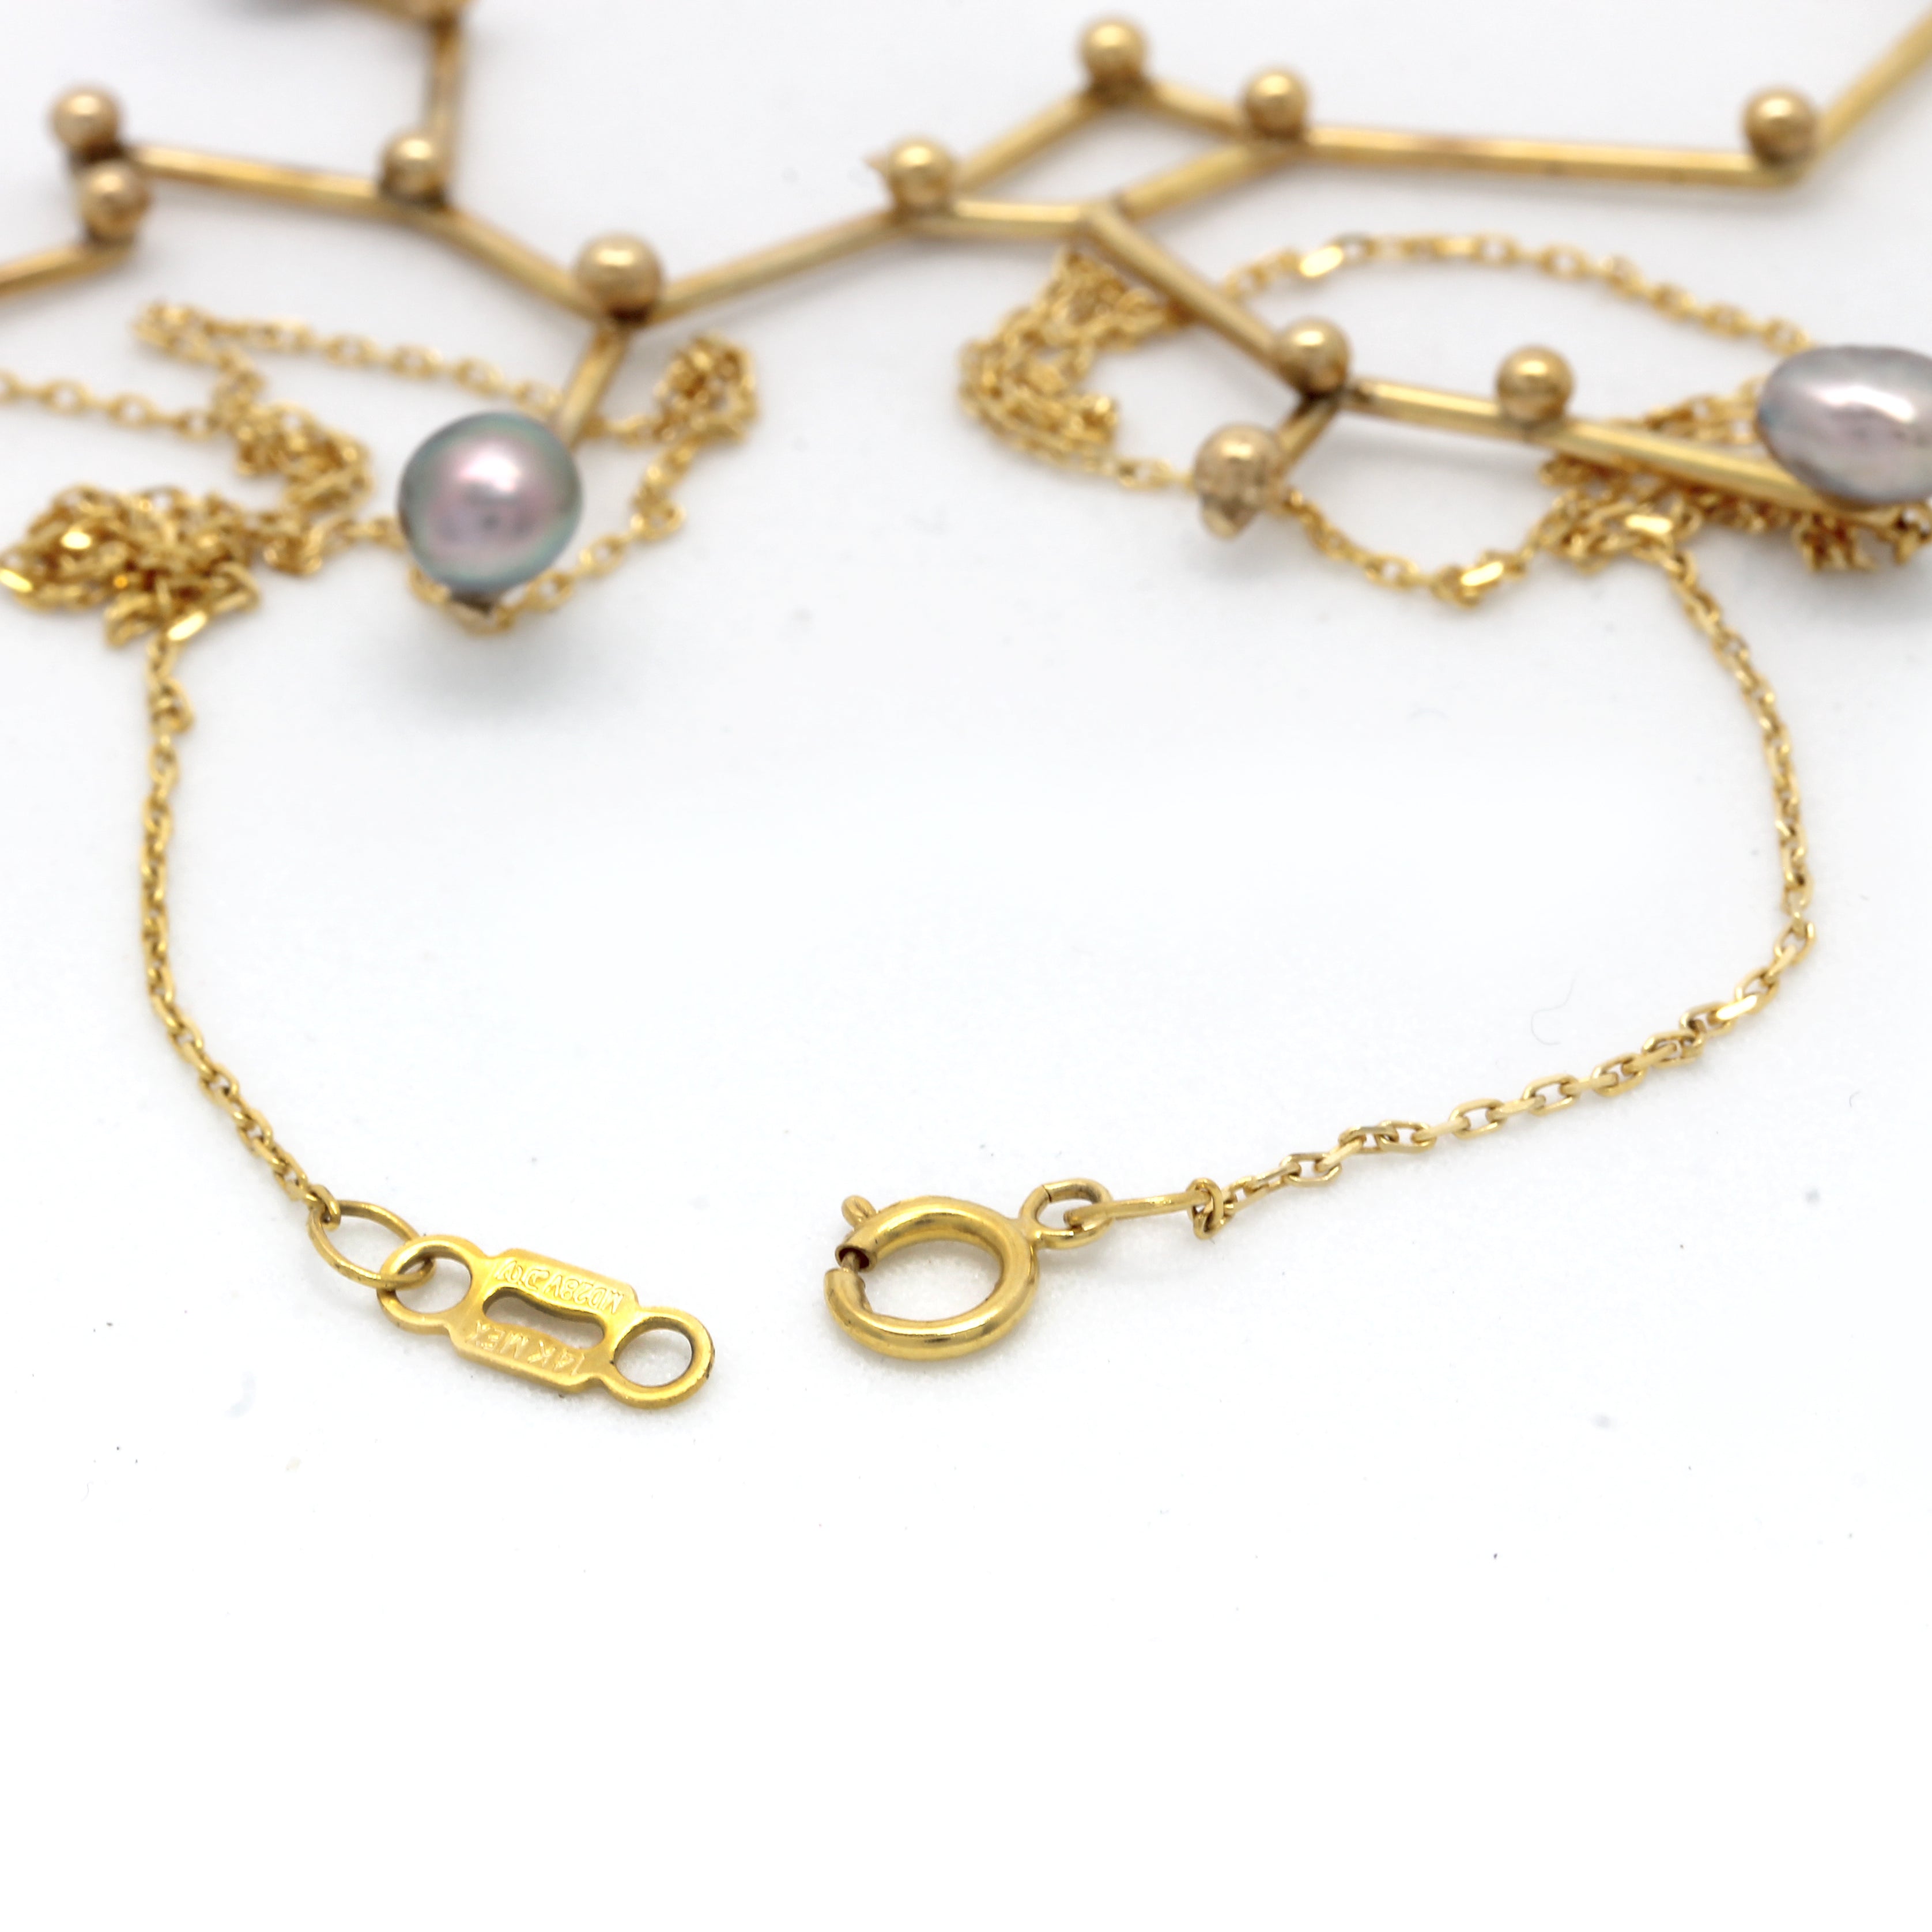 "Sagittarius (Nov 22th - Dec 21th)" 14K Yellow Gold Pendant and Chain with Cortez Keshi Pearls